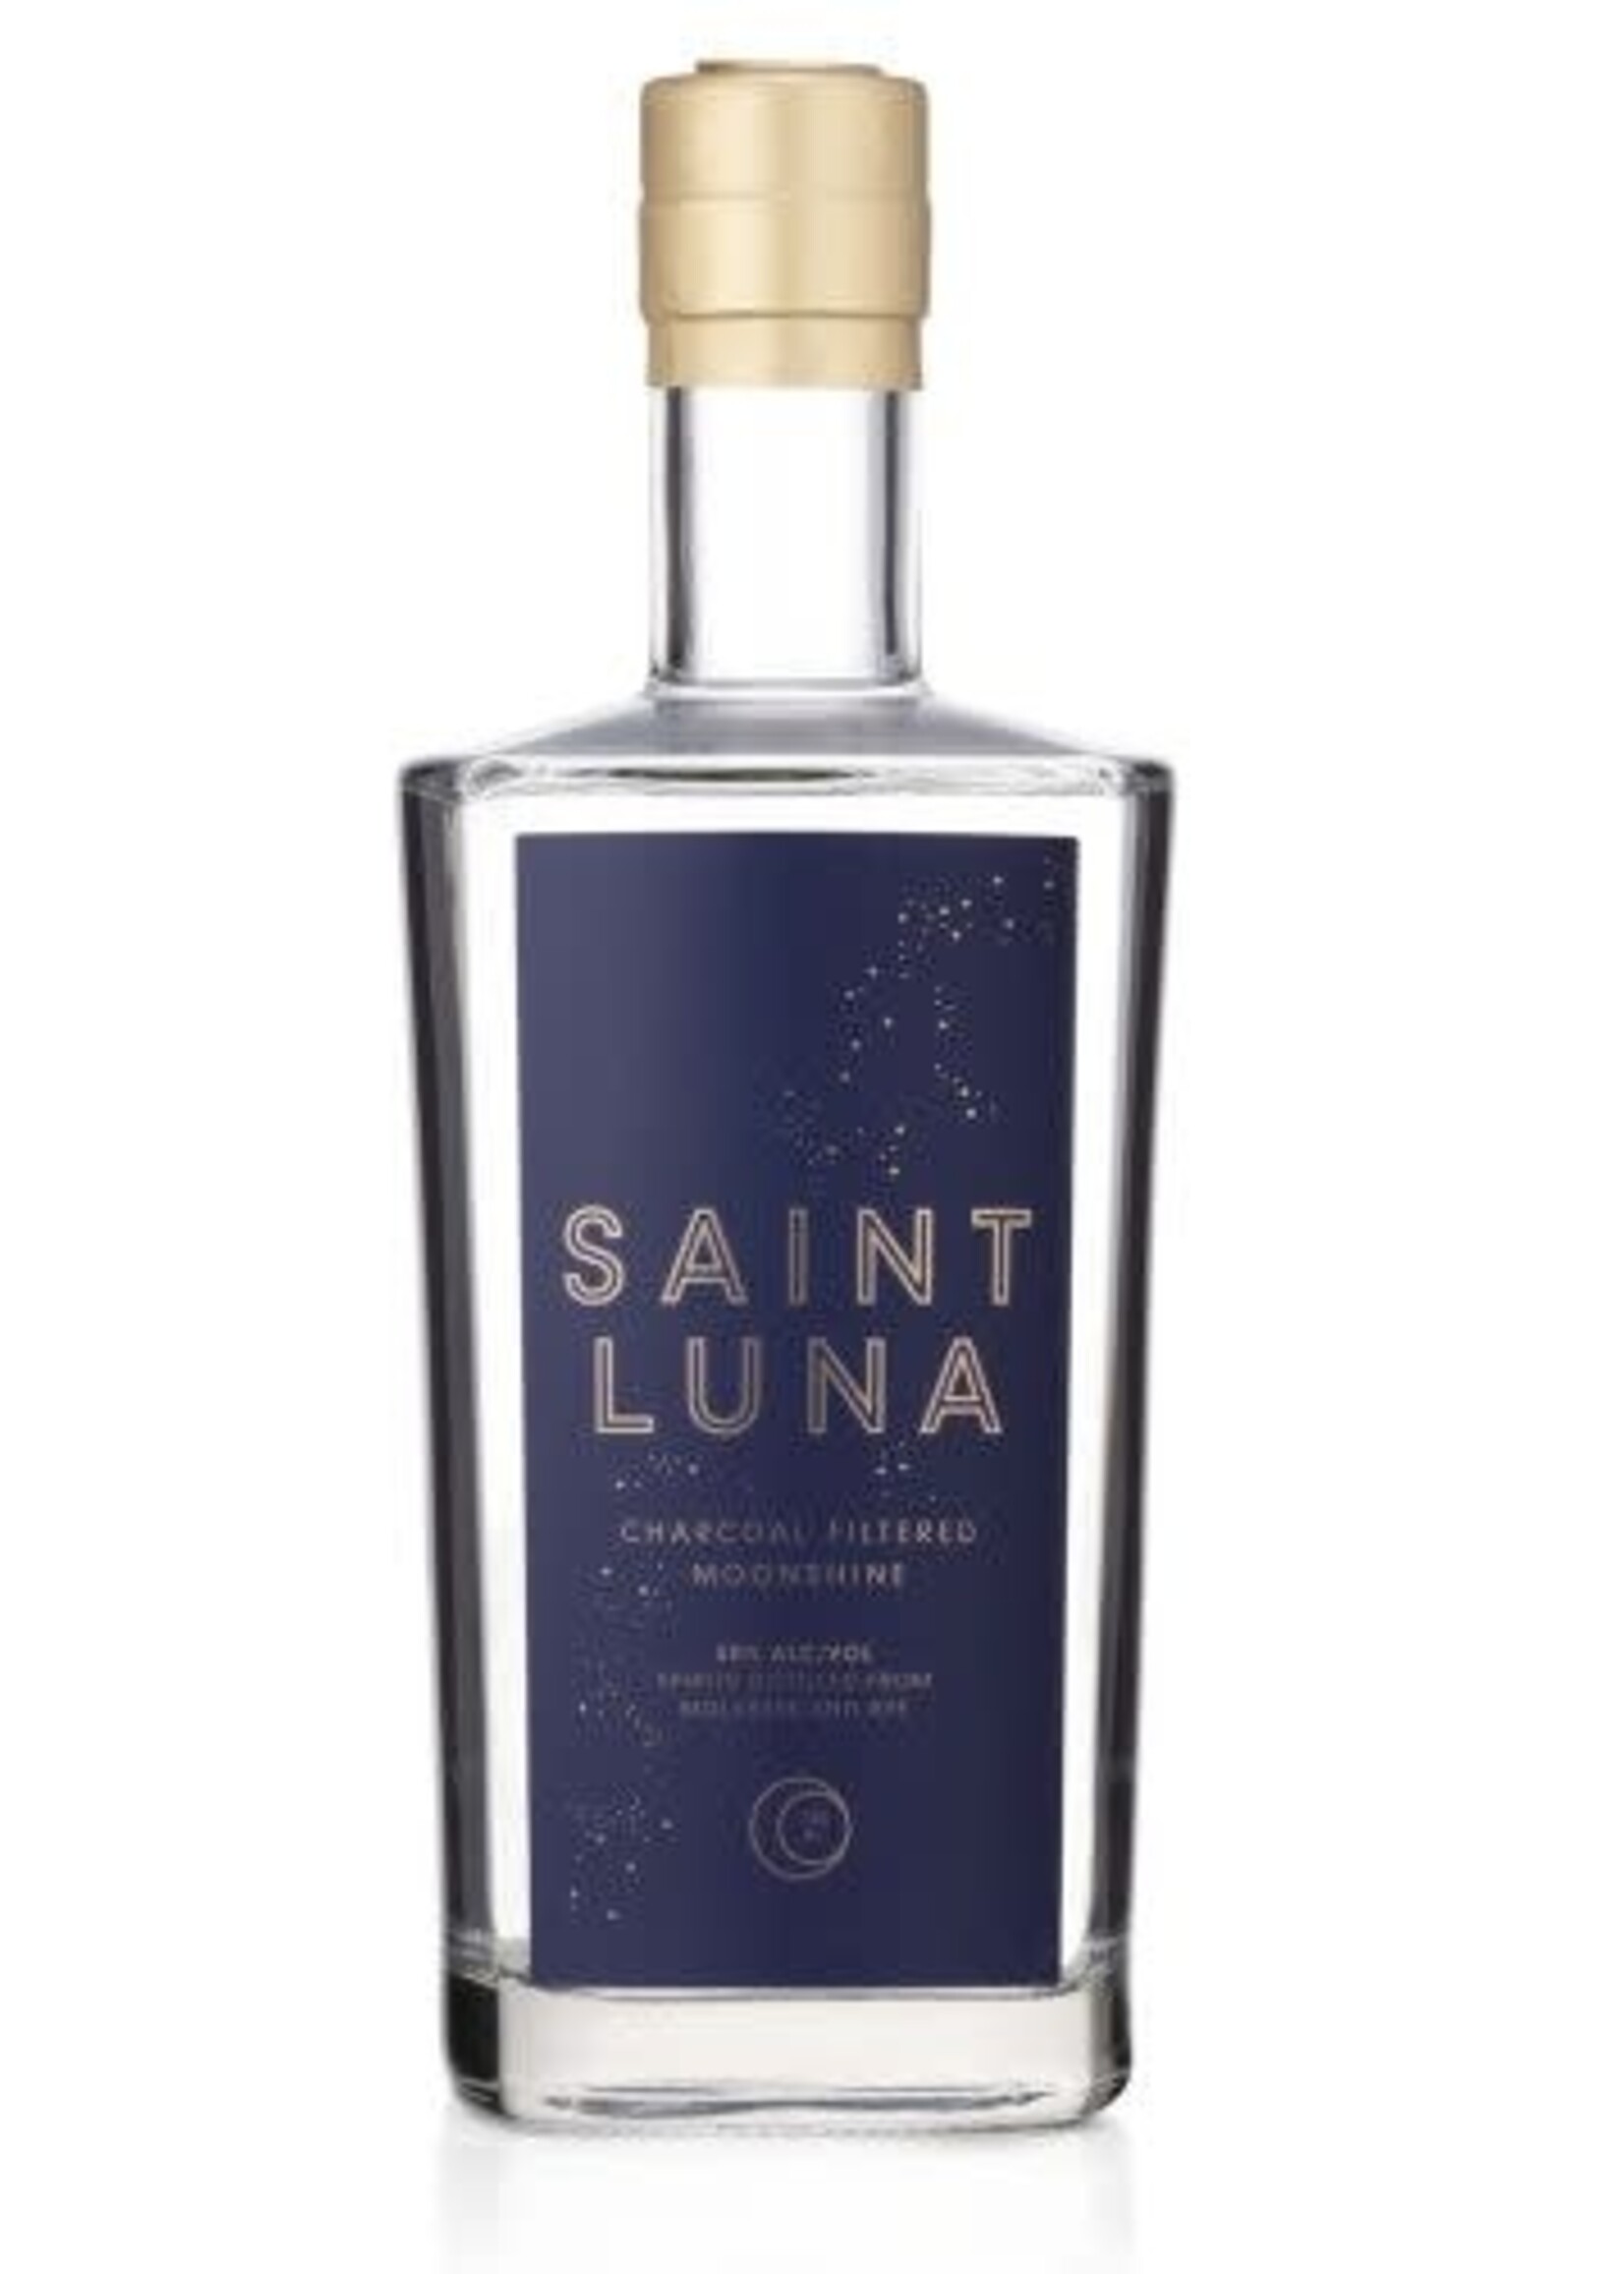 Saint Luna Saint Luna / Charcoal Filtered Moonshine  50% abv / 750mL